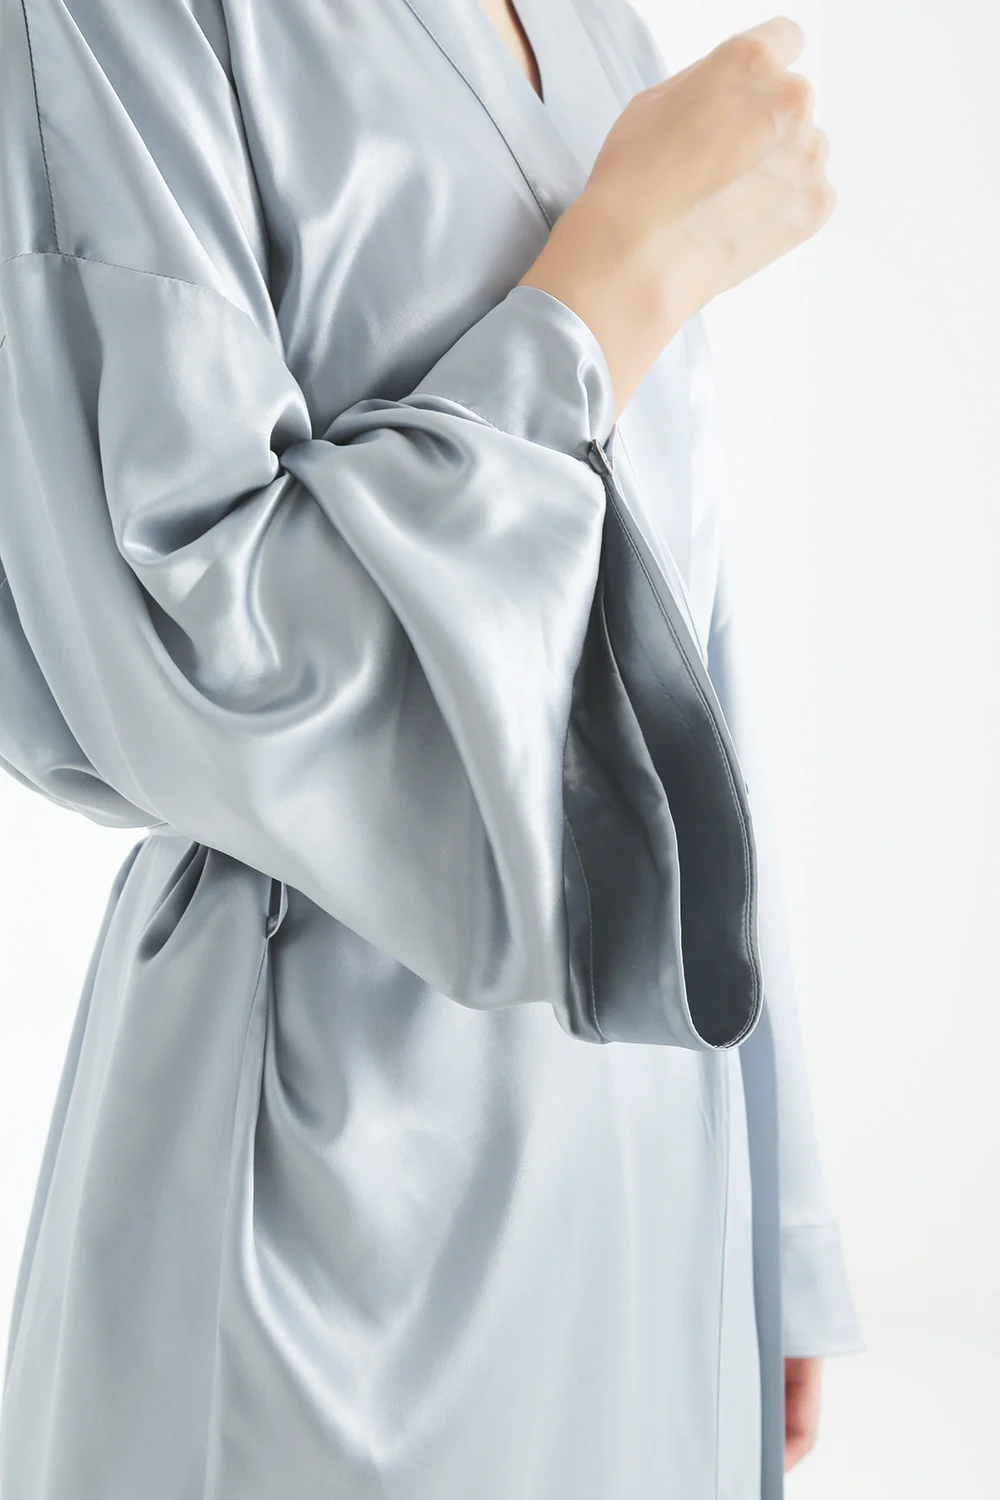 Ladies Stain silk night dress  Robe Long Pajamas Sleepwear Pajama Sets Wholesale 100% Silk Winter Clothes for Women Woven Adults